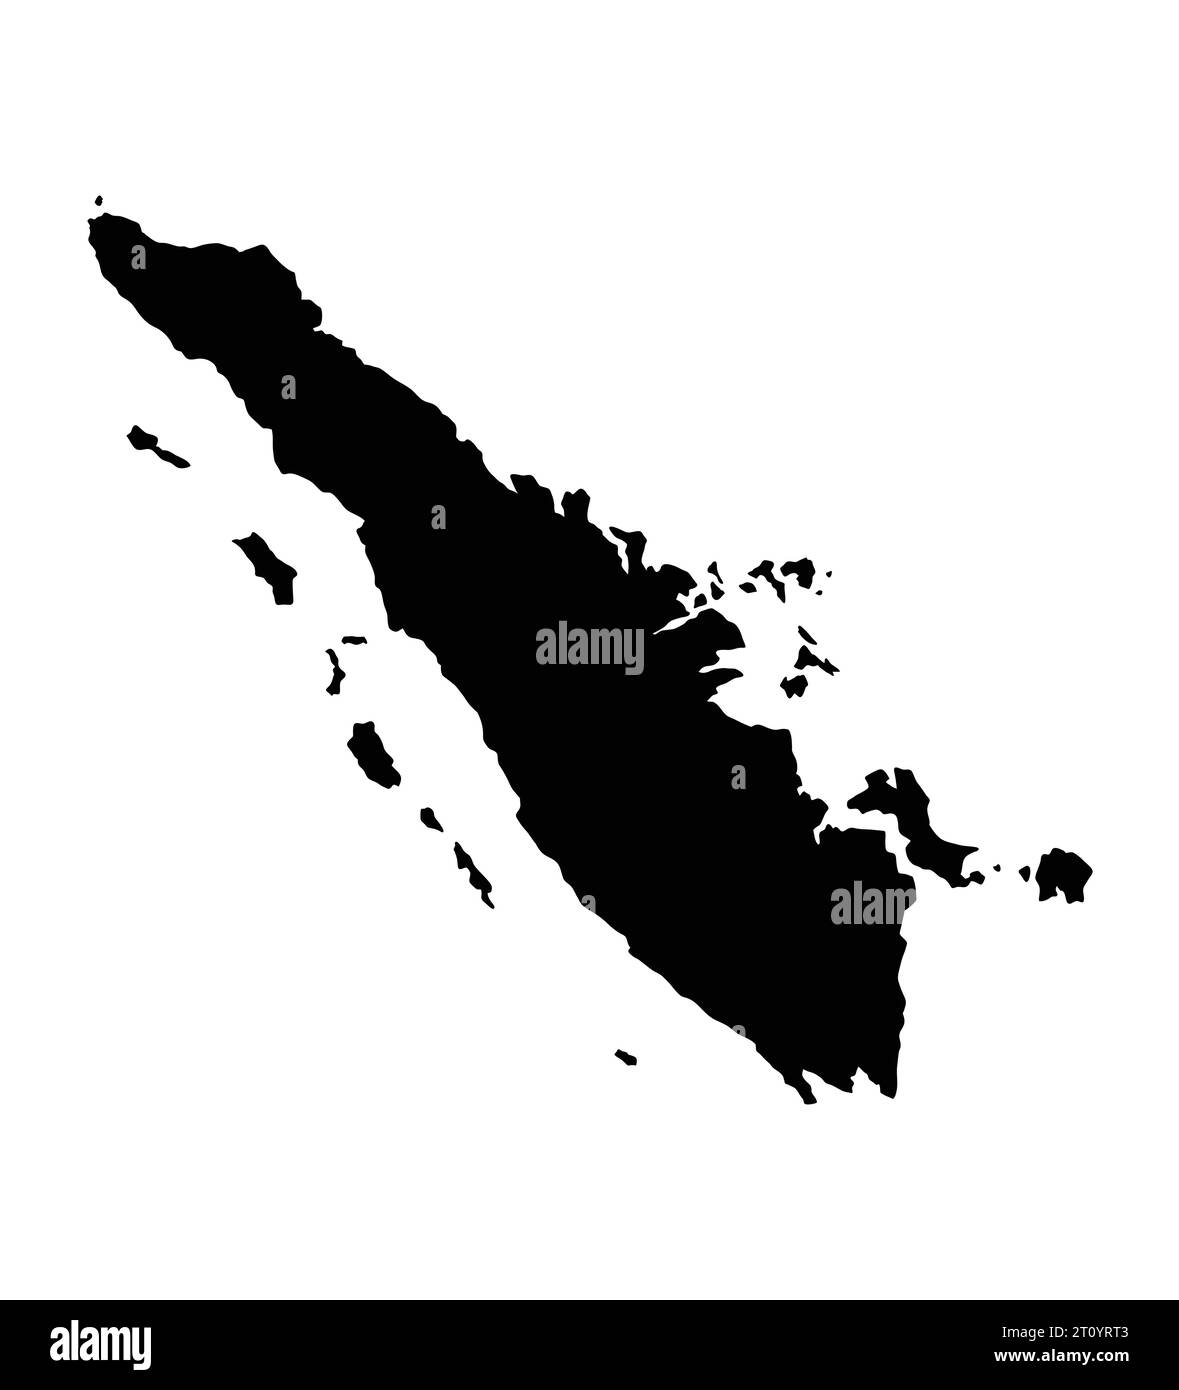 Sumatra Indonesia island map silhouette region territory, black shape style illustration Stock Vector